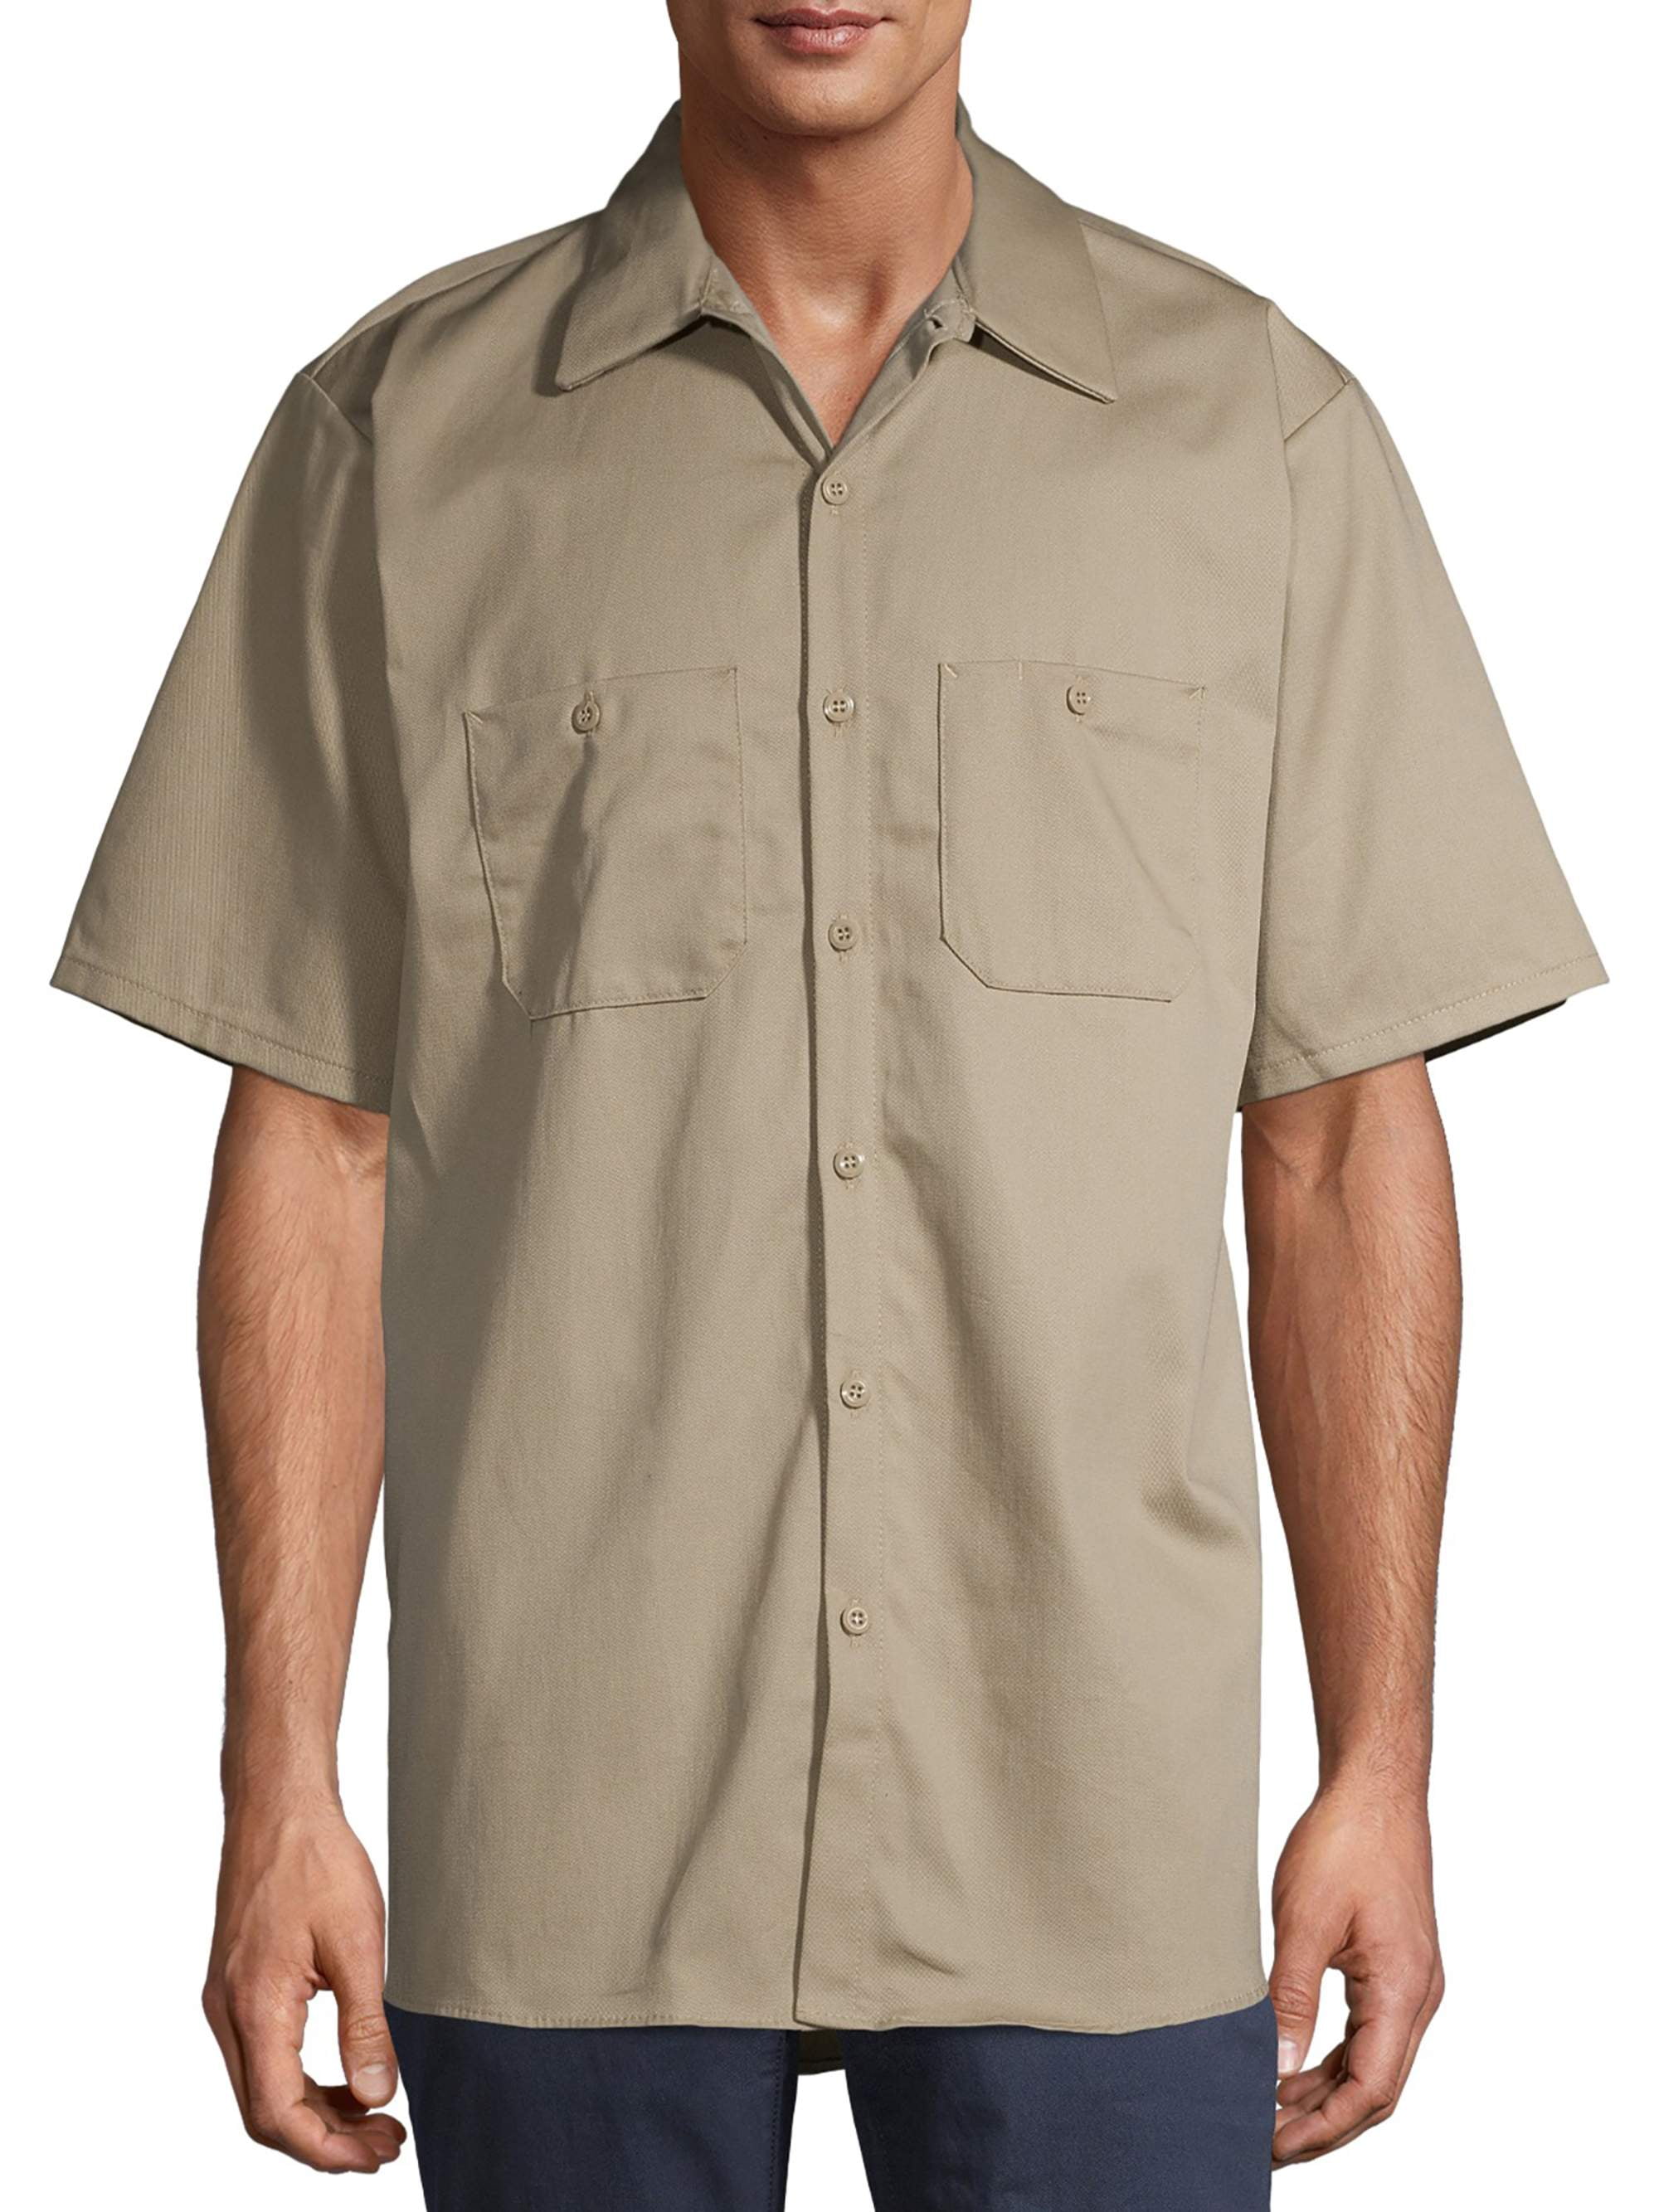 Red Kap Men's Short Sleeve Utility Uniform Work Shirt Khaki 